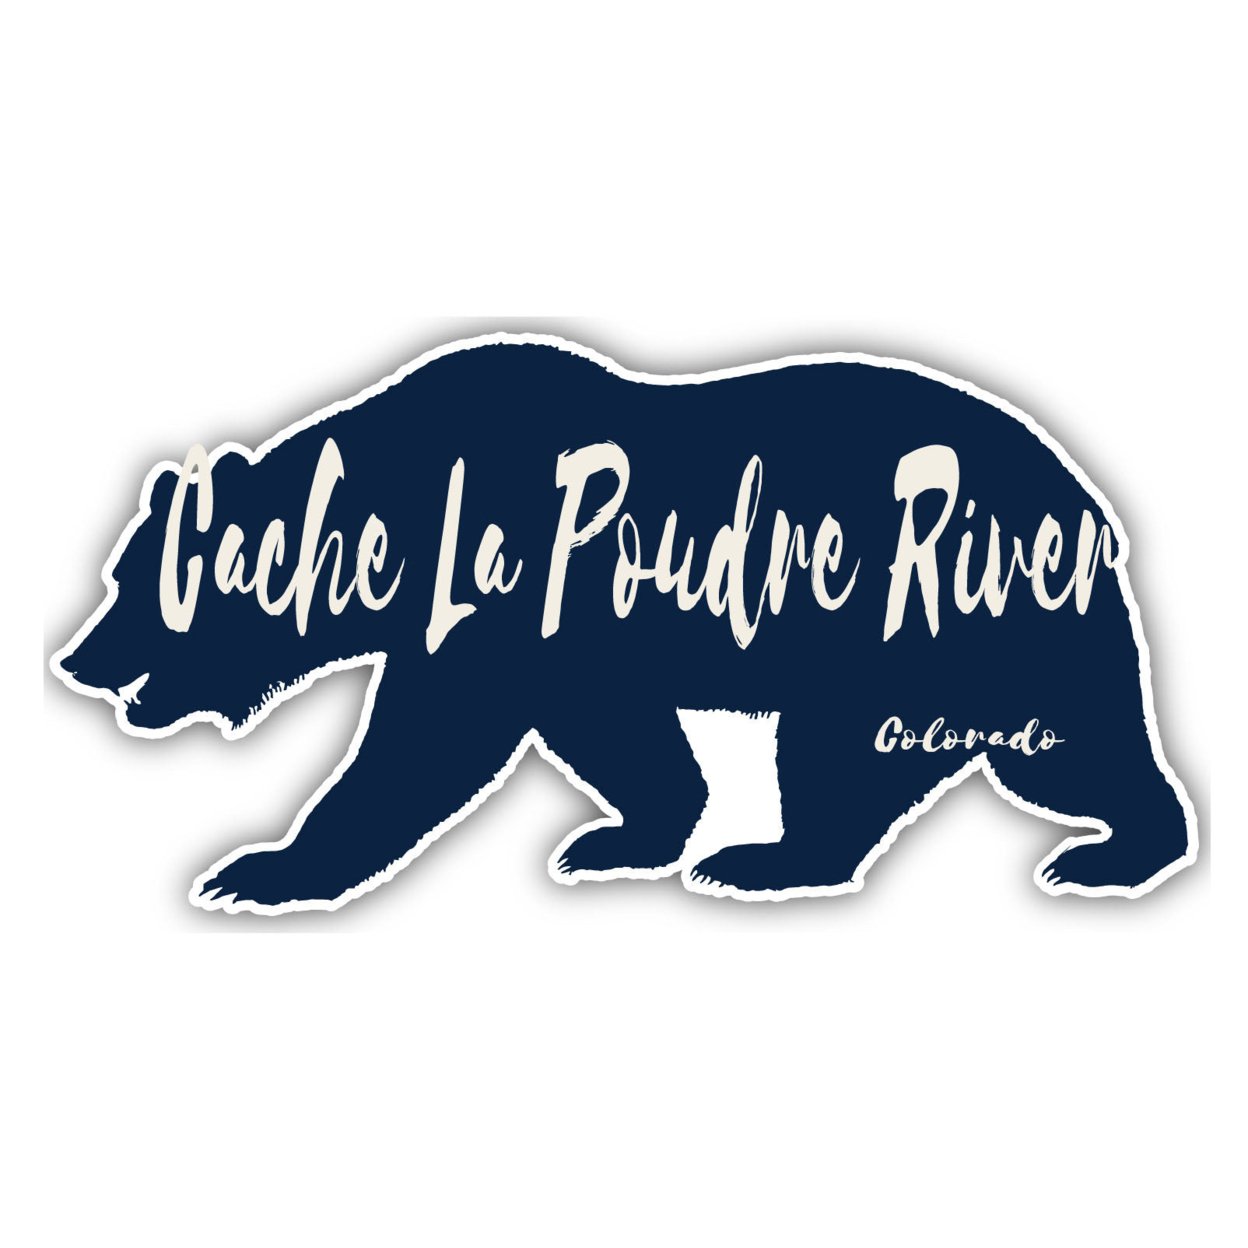 Cache La Poudre River Colorado Souvenir Decorative Stickers (Choose Theme And Size) - 4-Pack, 6-Inch, Bear